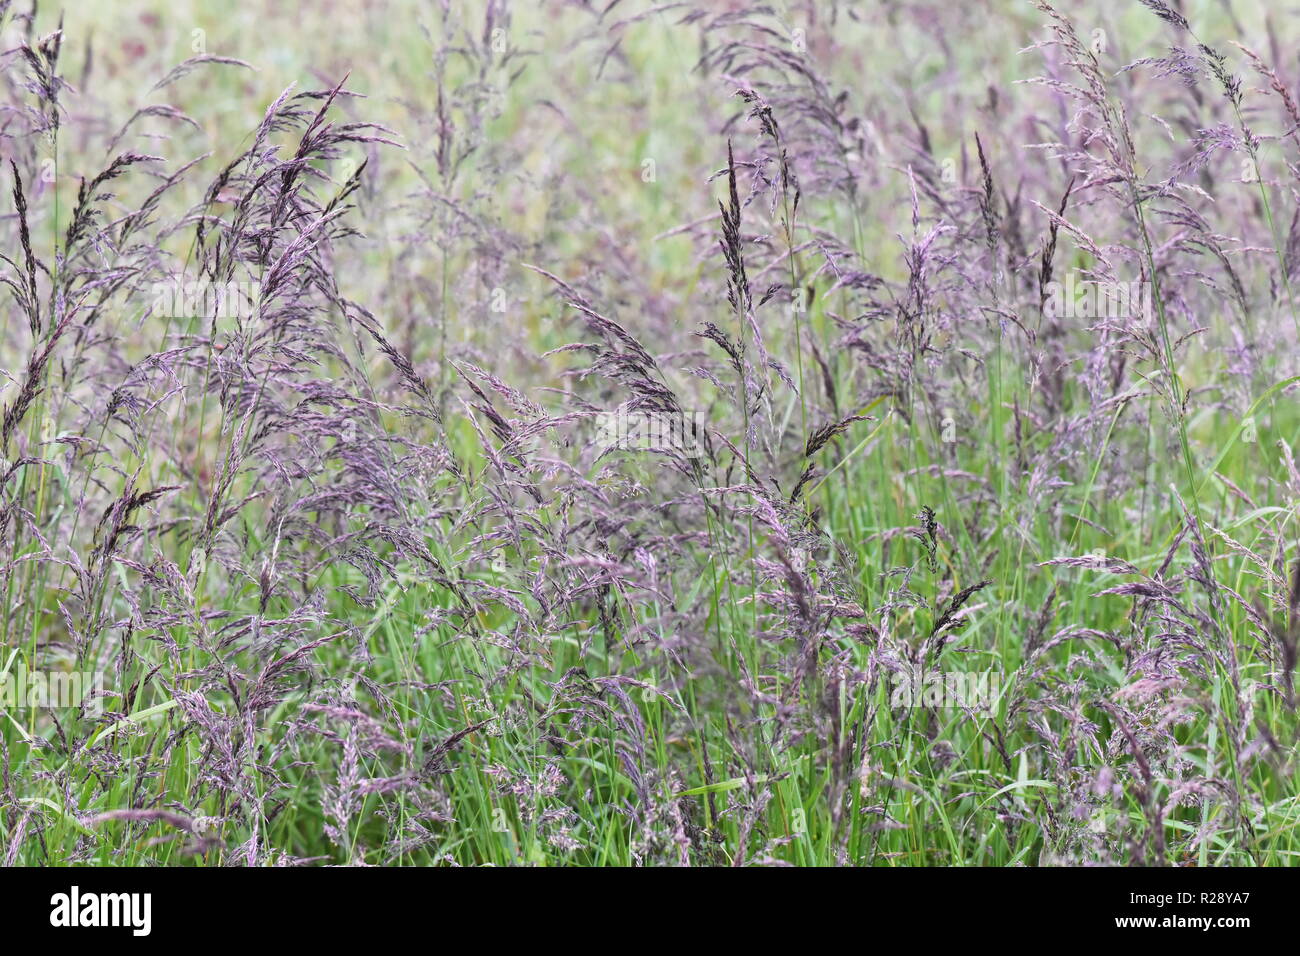 The bunch grass Festuca rubra in a natural field Stock Photo